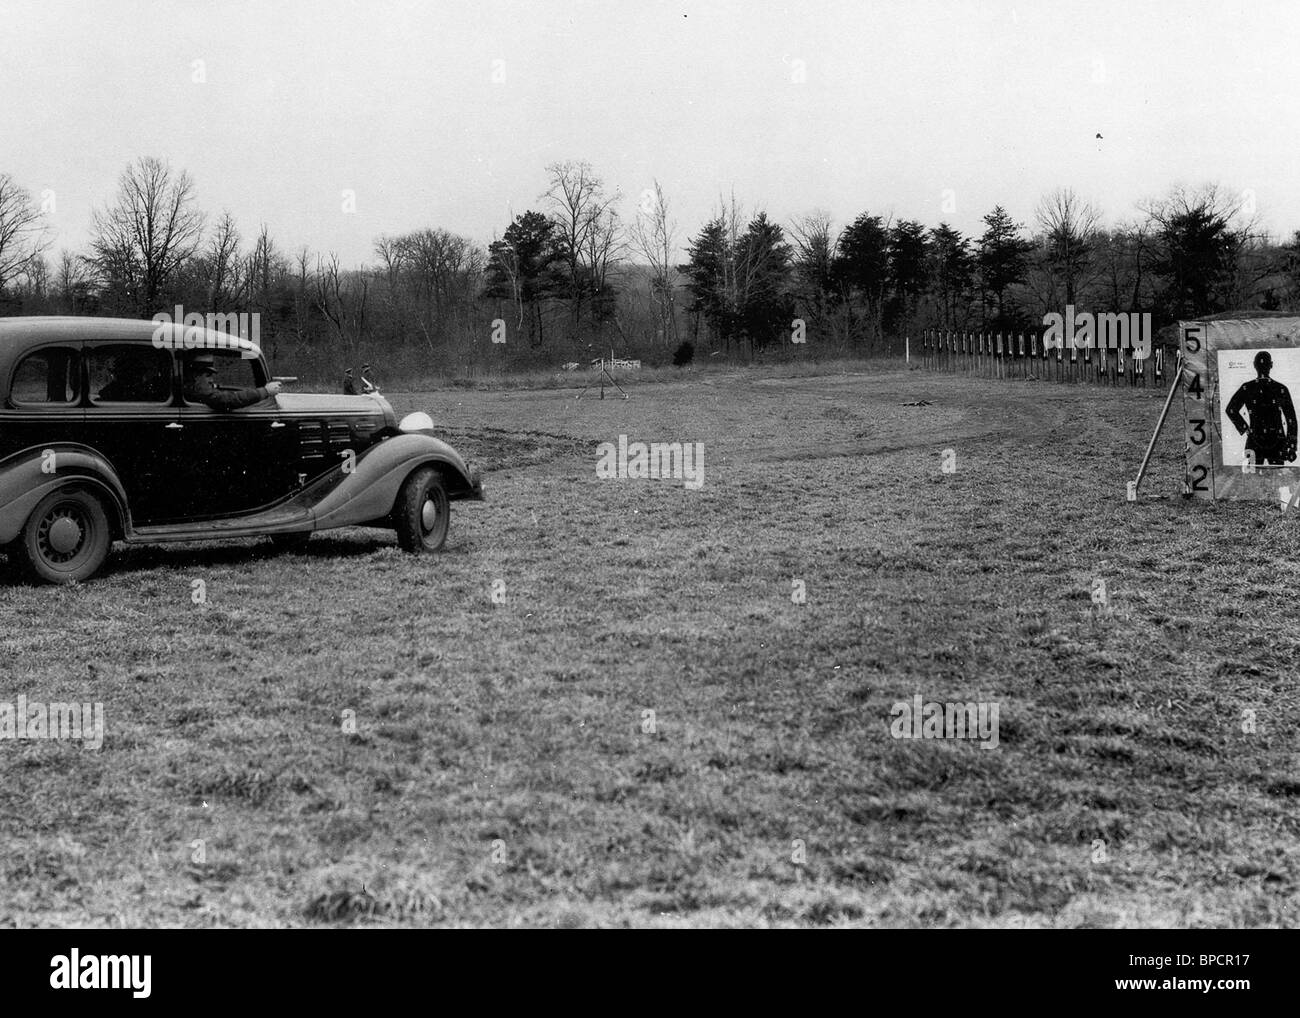 FBI Special agent target practice,1930s Stock Photo